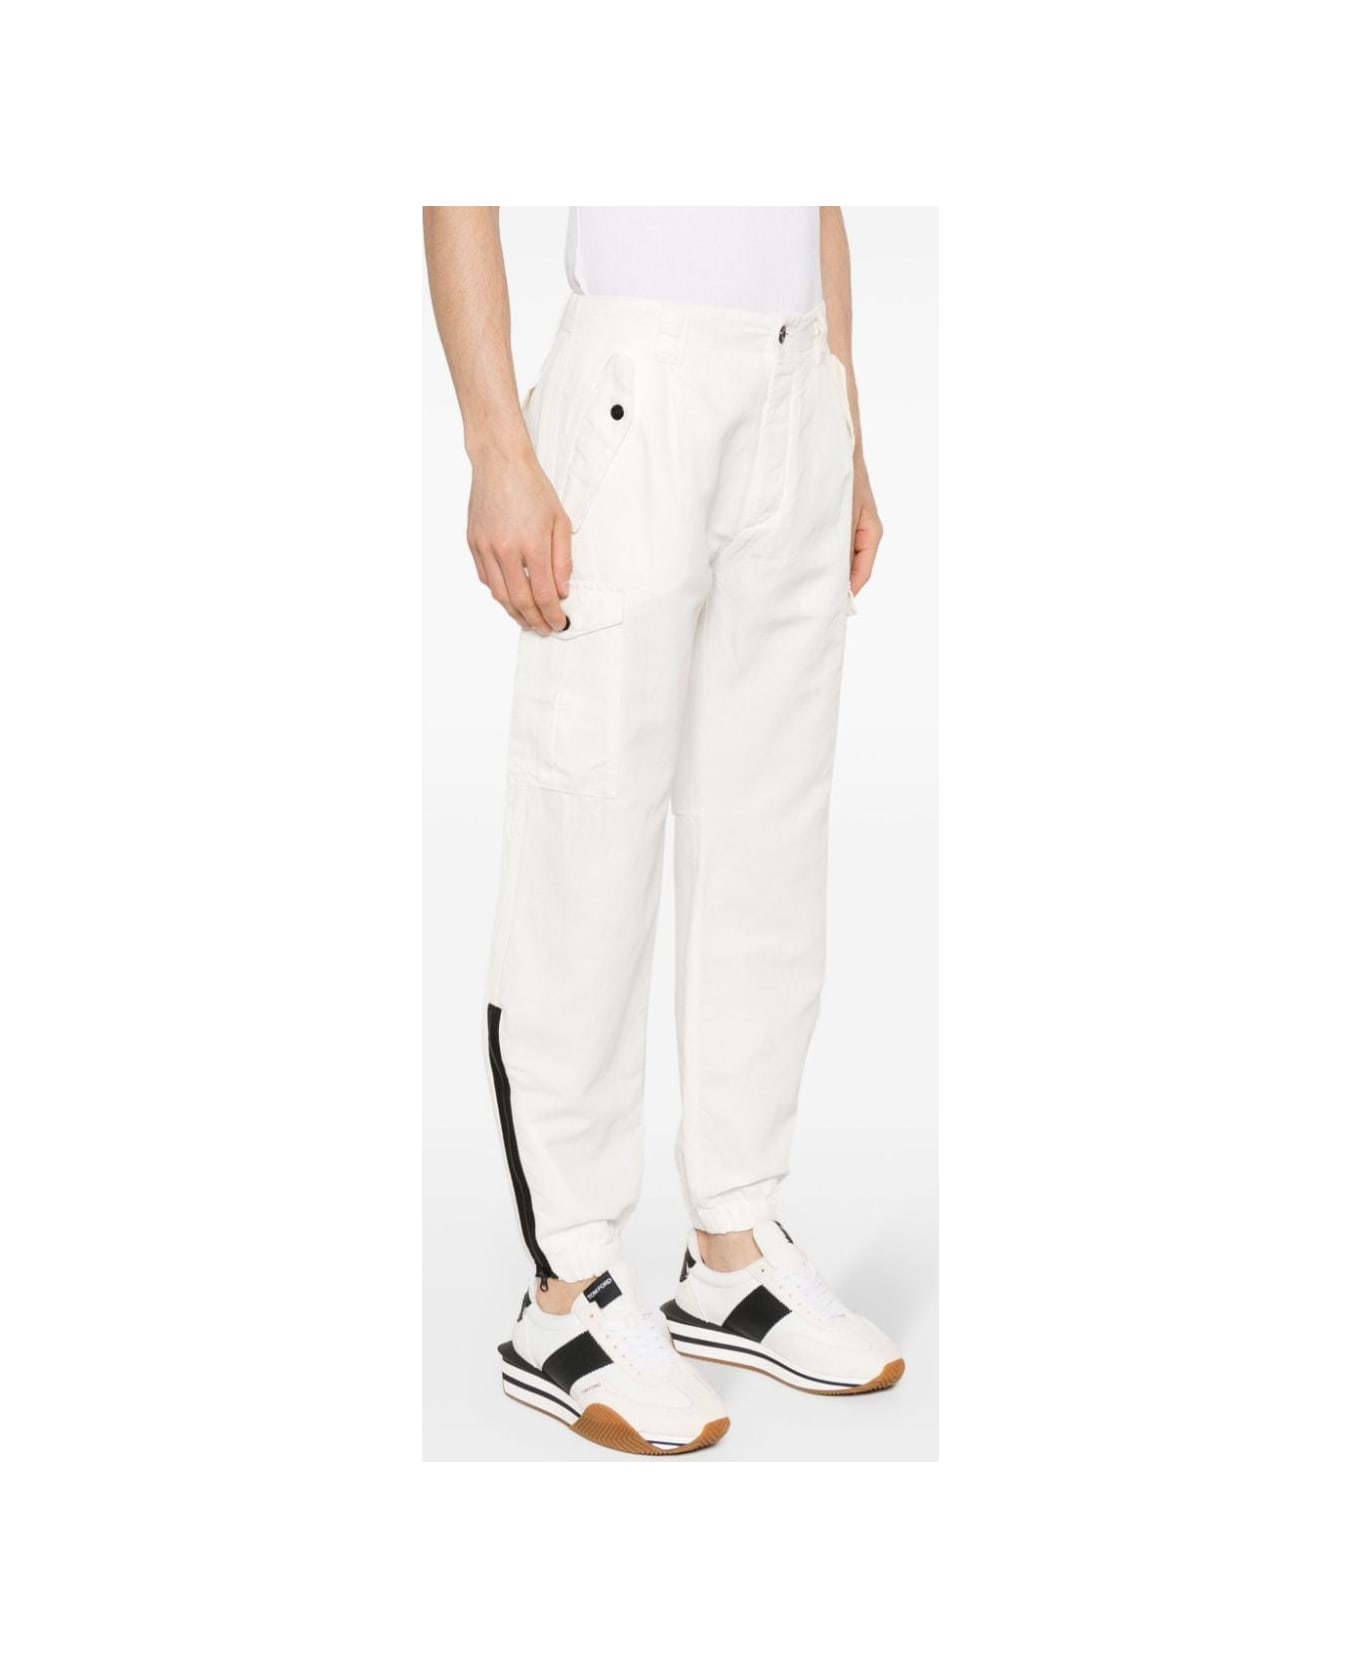 C.P. Company Trousers - White ボトムス